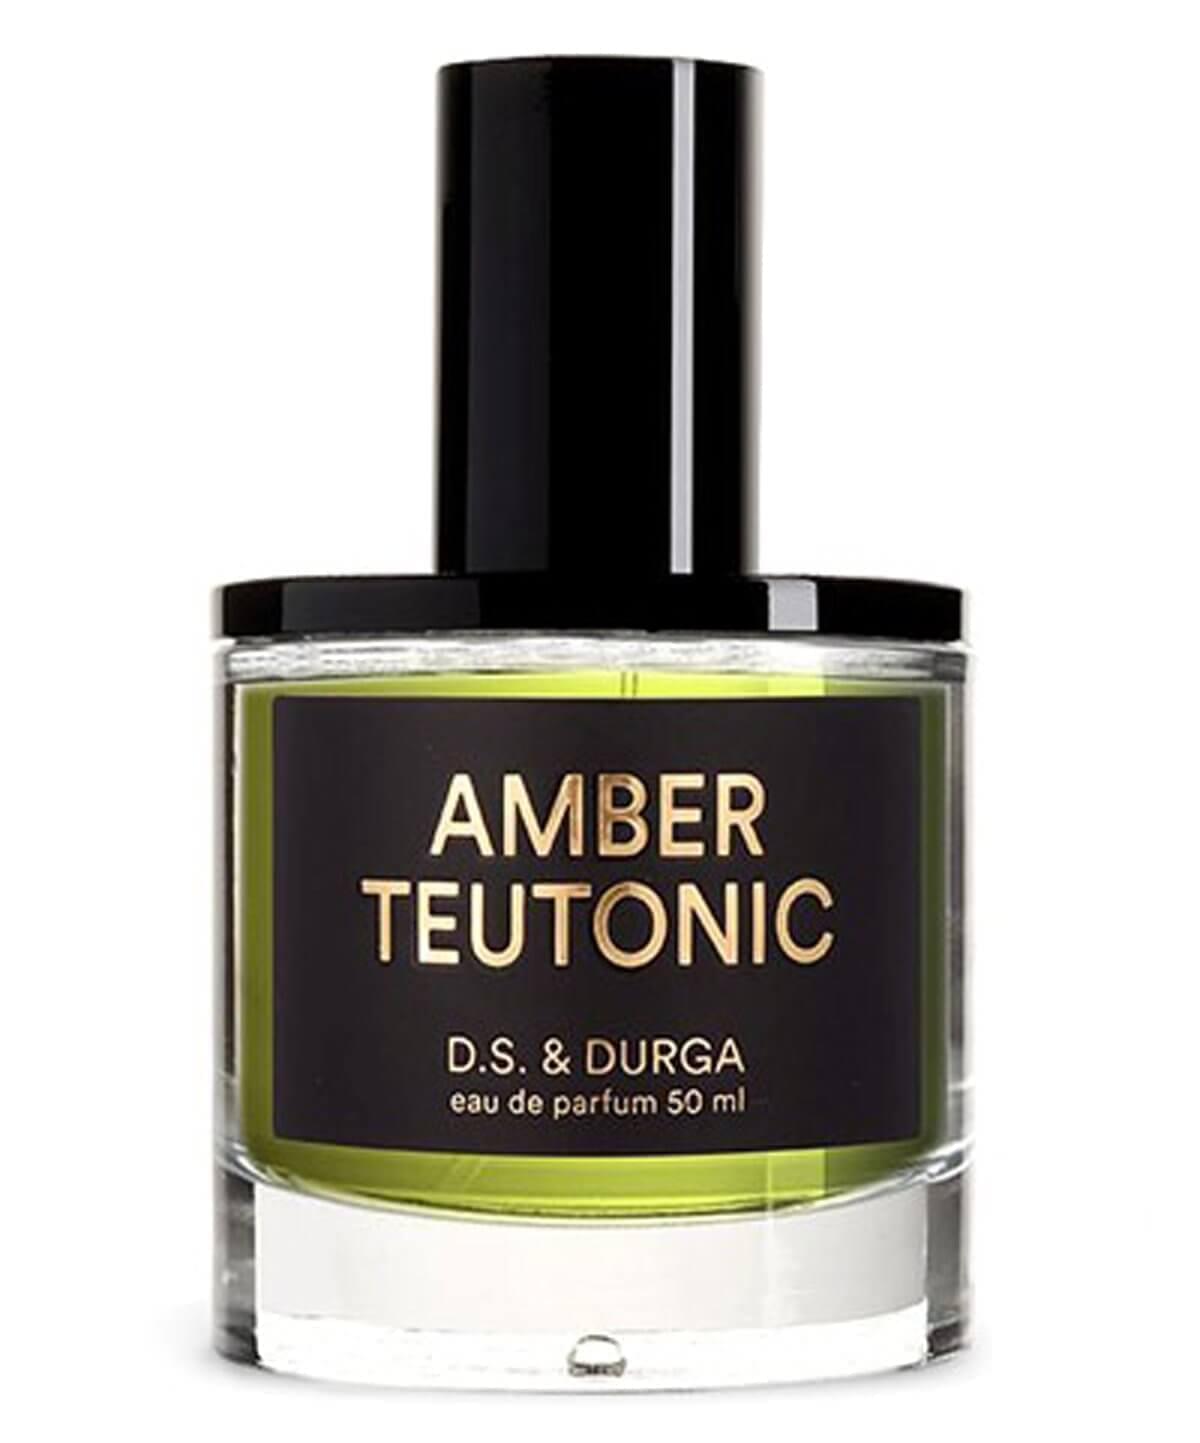 Amber Teutonic by D.S. & Durga